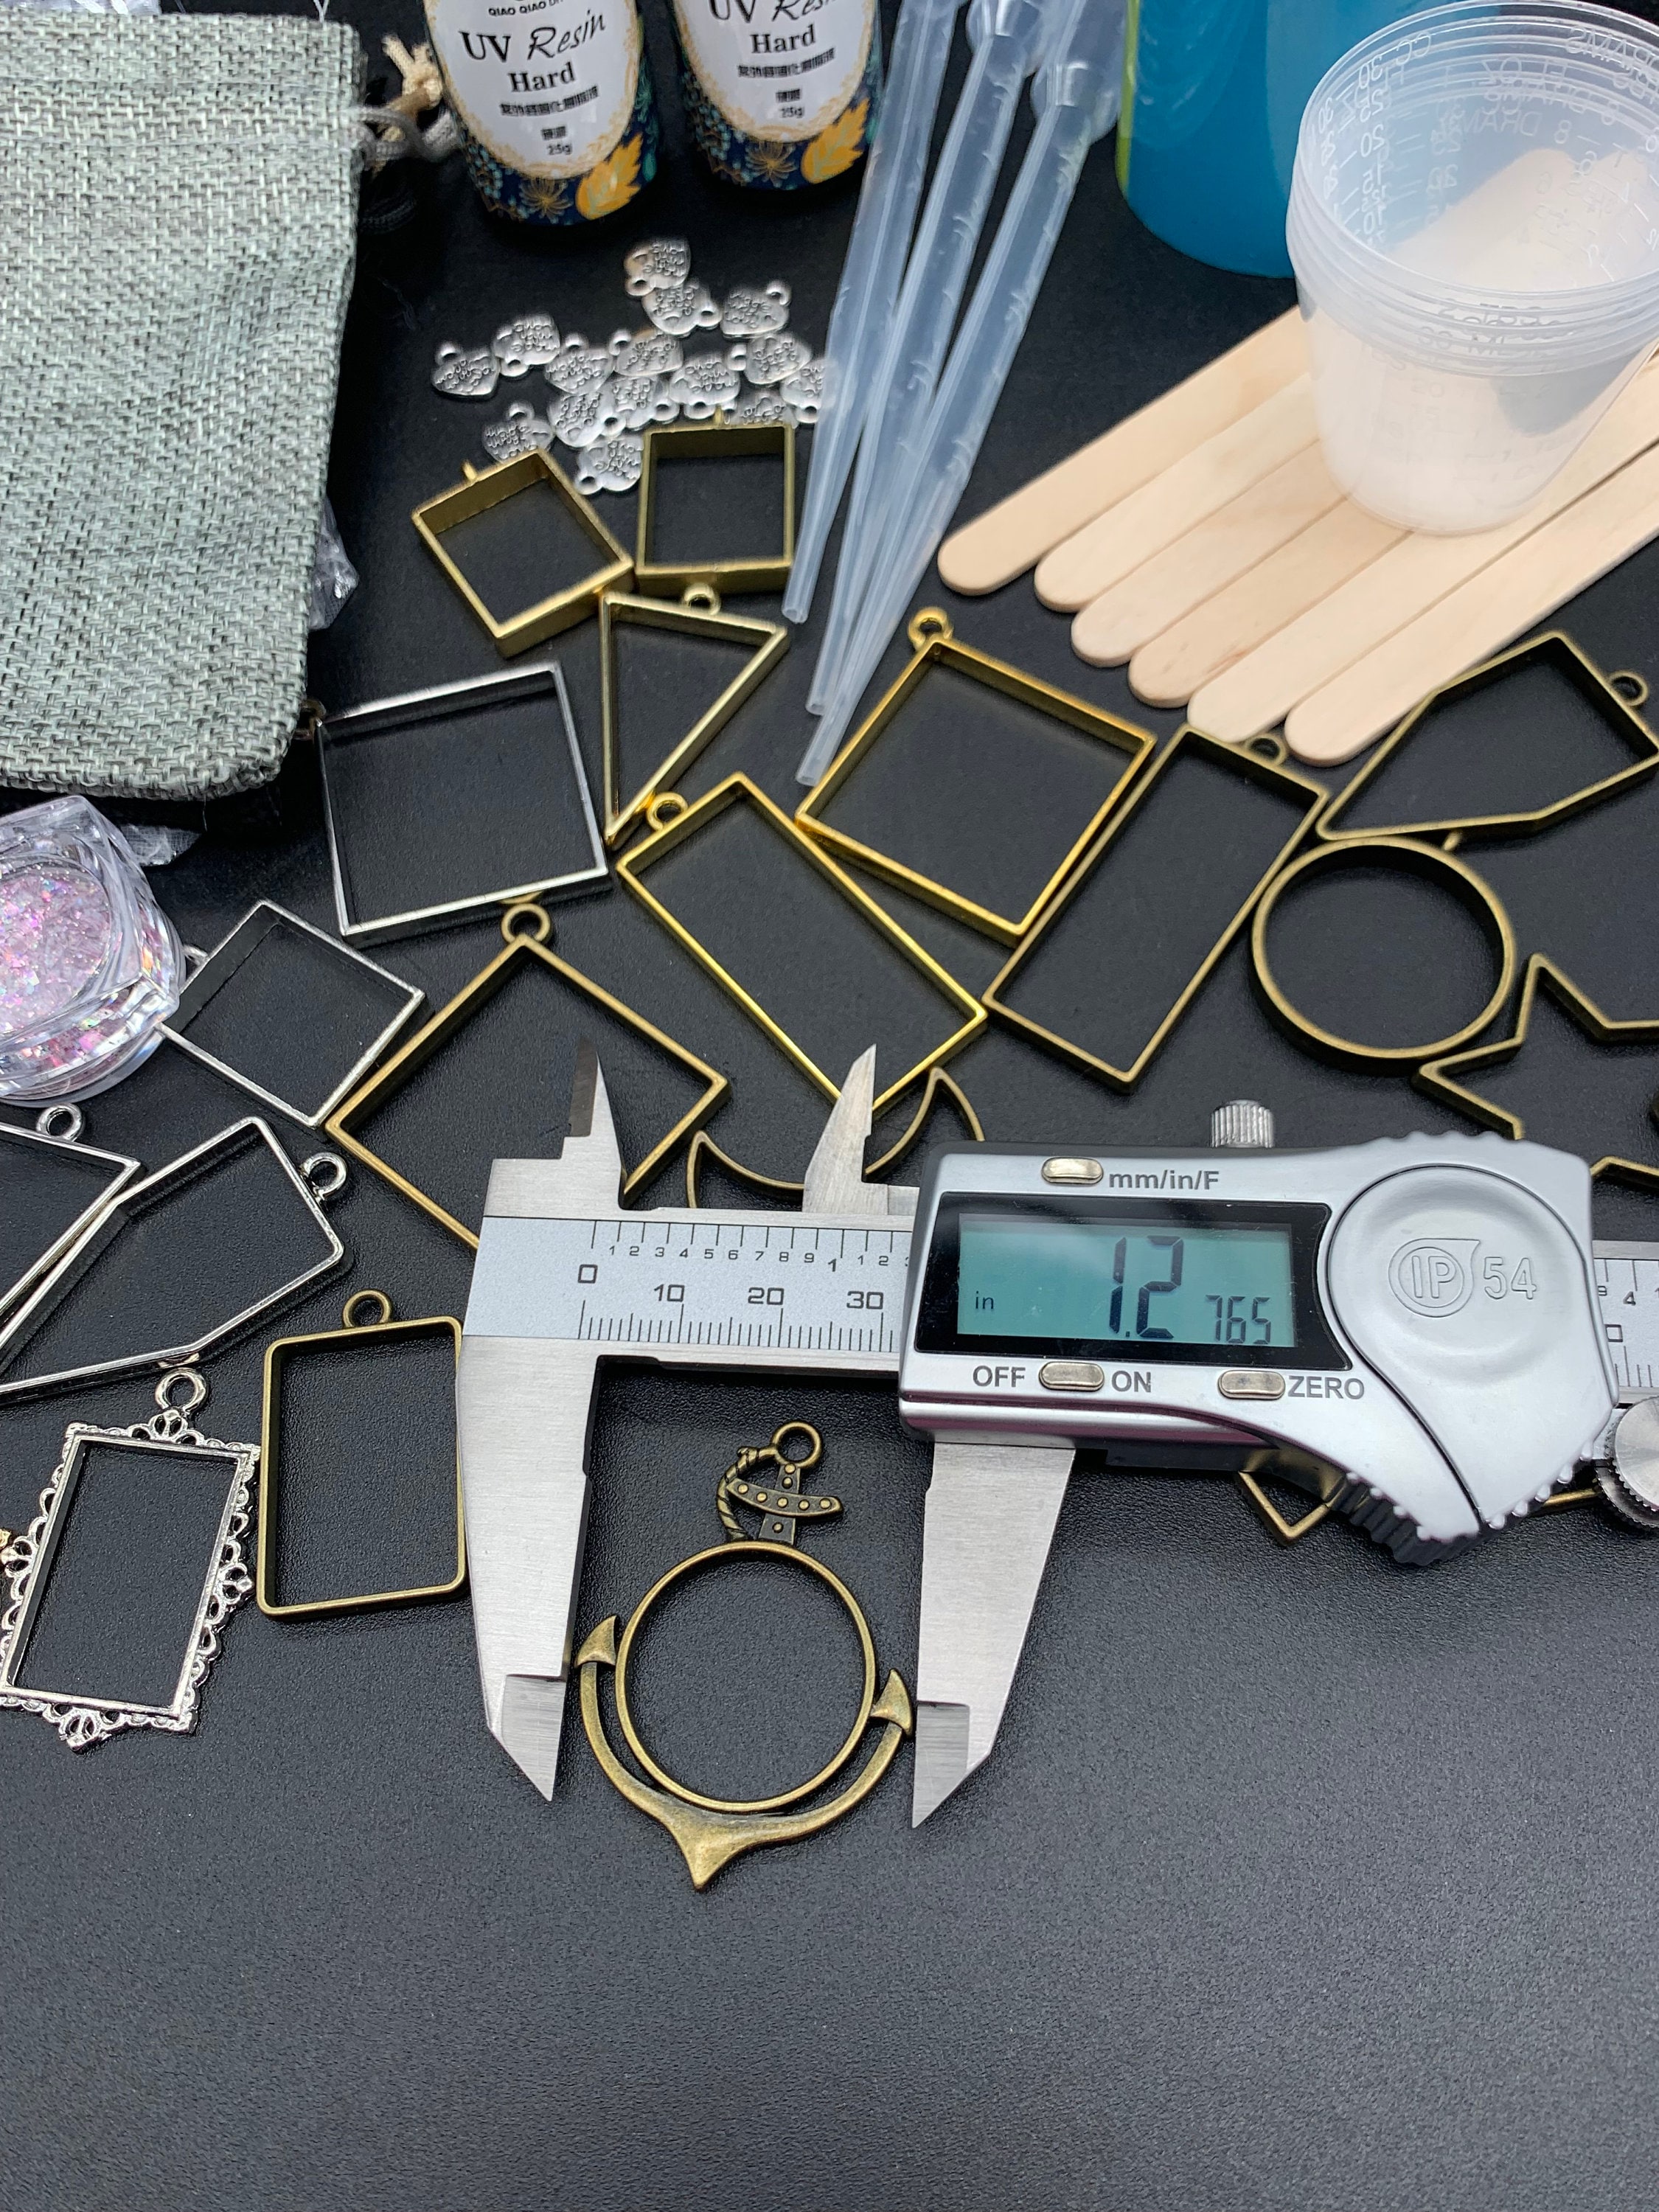 Funshowcase Aluminum Wire DIY Open Bezels Effects UV Resin Epoxy Casting Jewelry Making Kit Flat Round 3mm 1mm, 4481-4483 Set